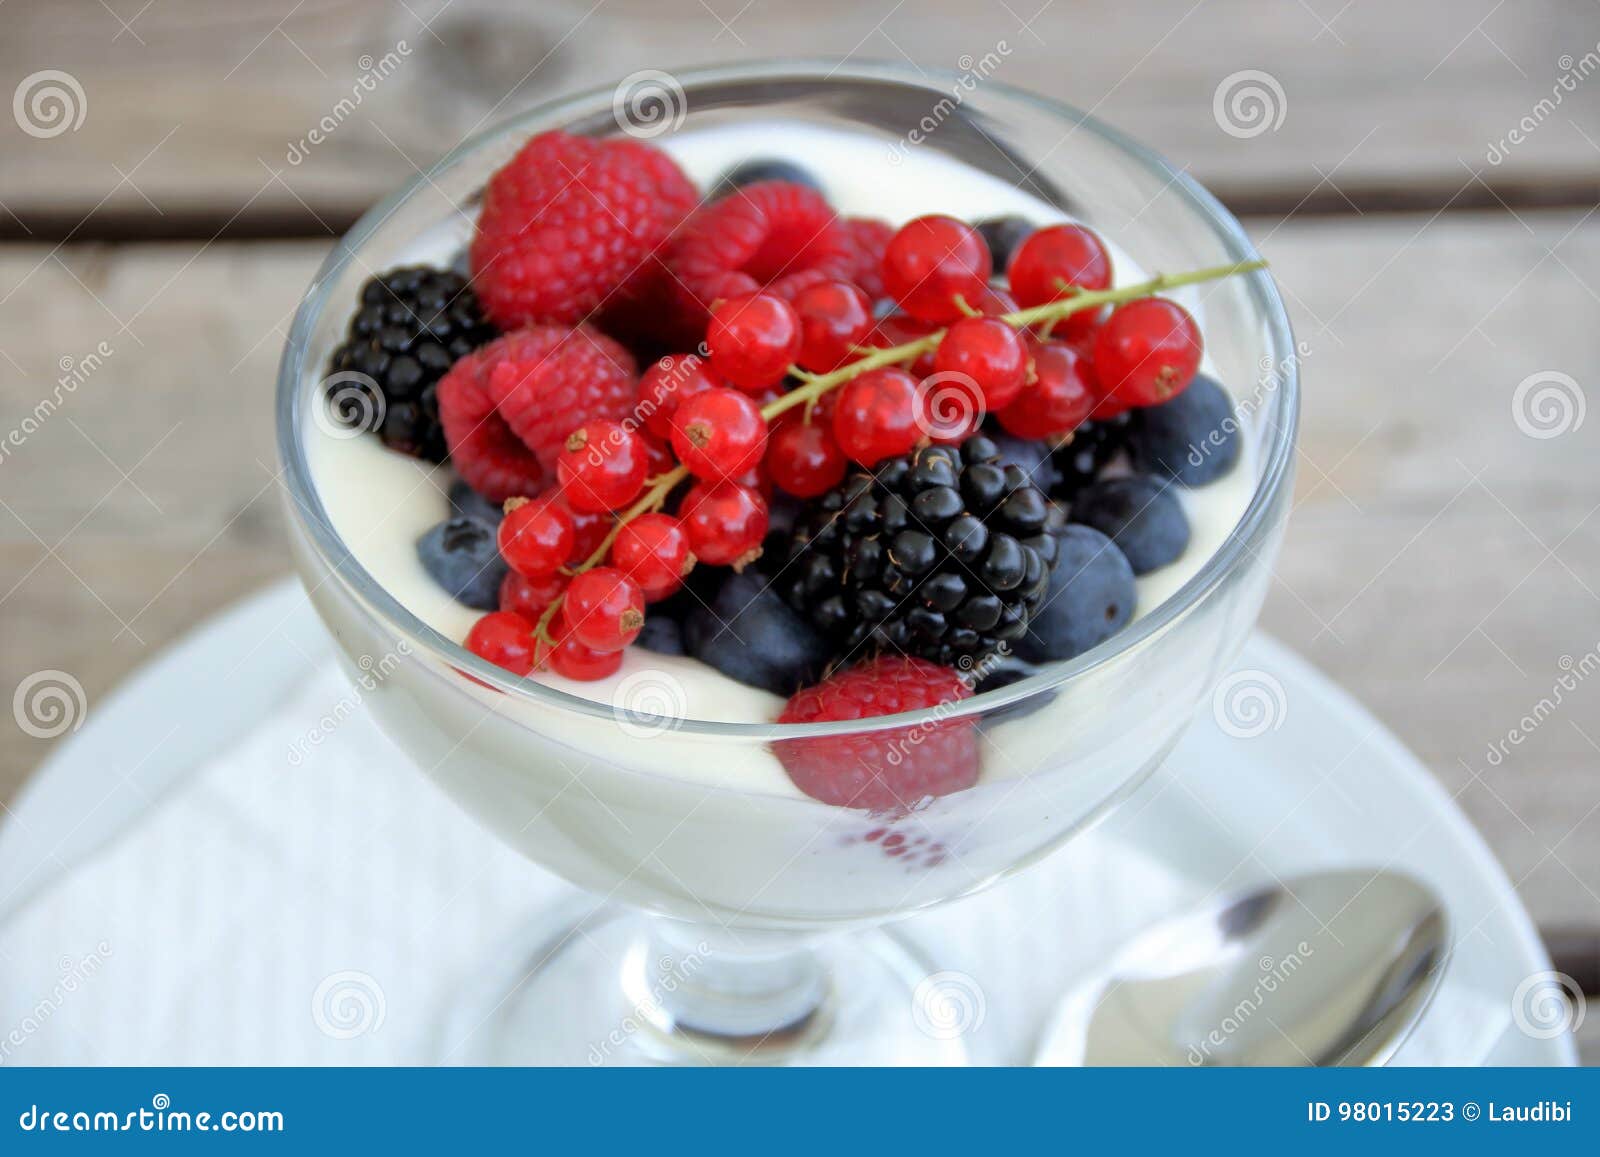 Yogurt with wild berries stock image. Image of dessert - 98015223